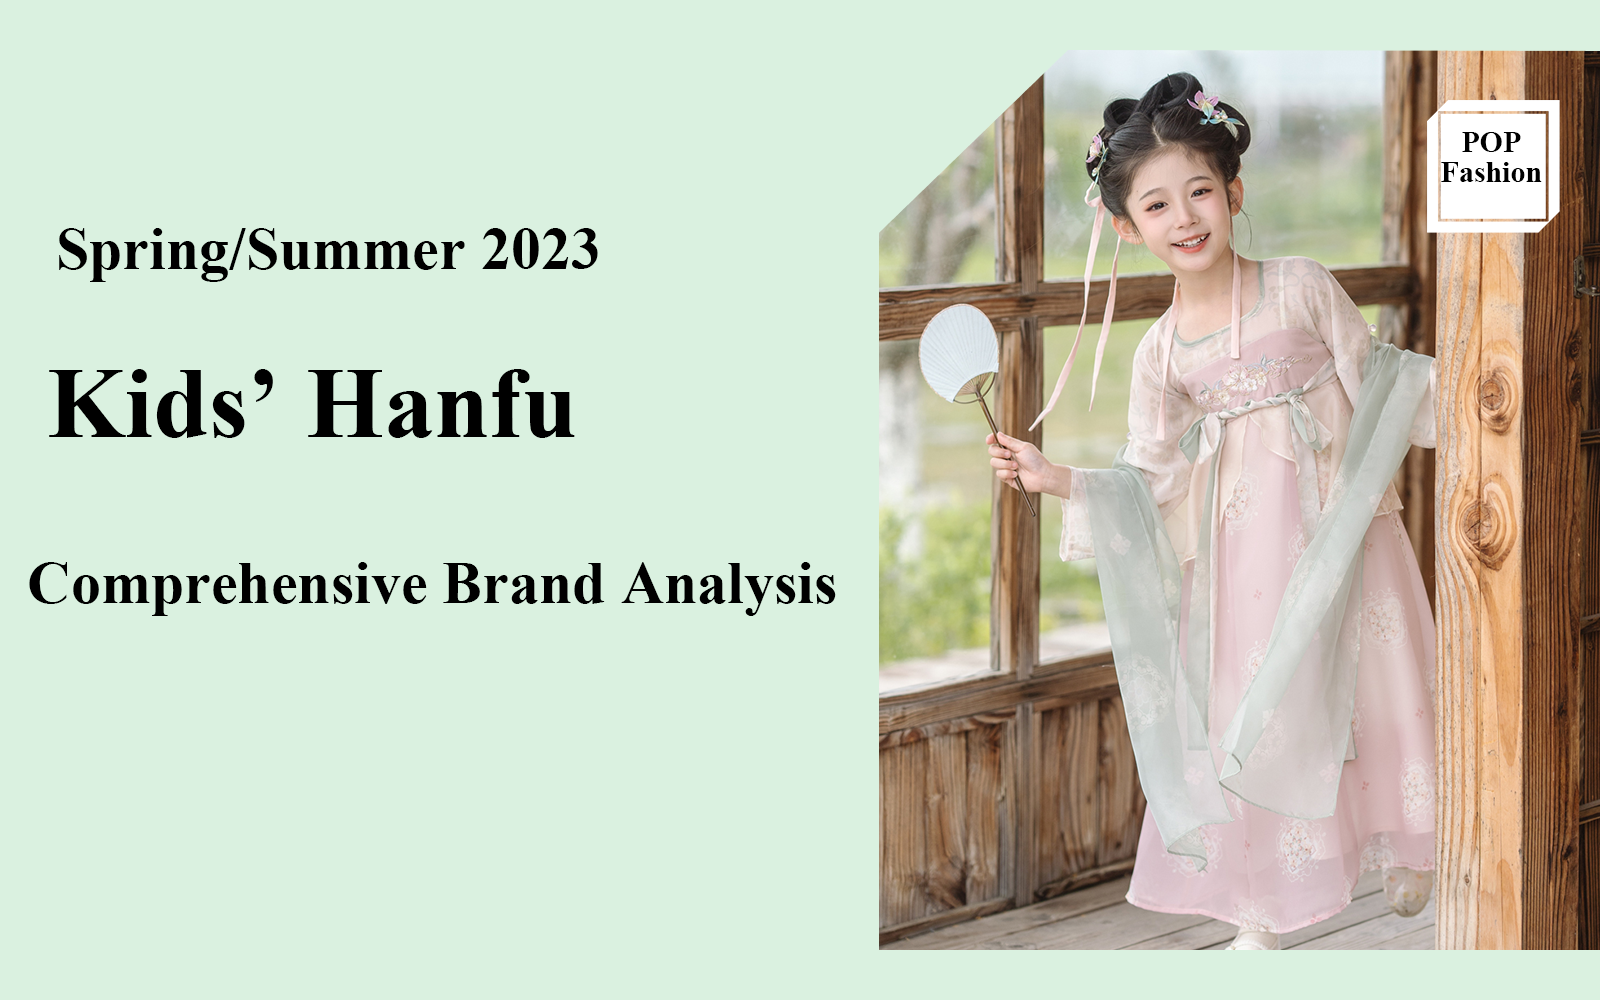 The Comprehensive Brand Analysis of Kids' Hanfu